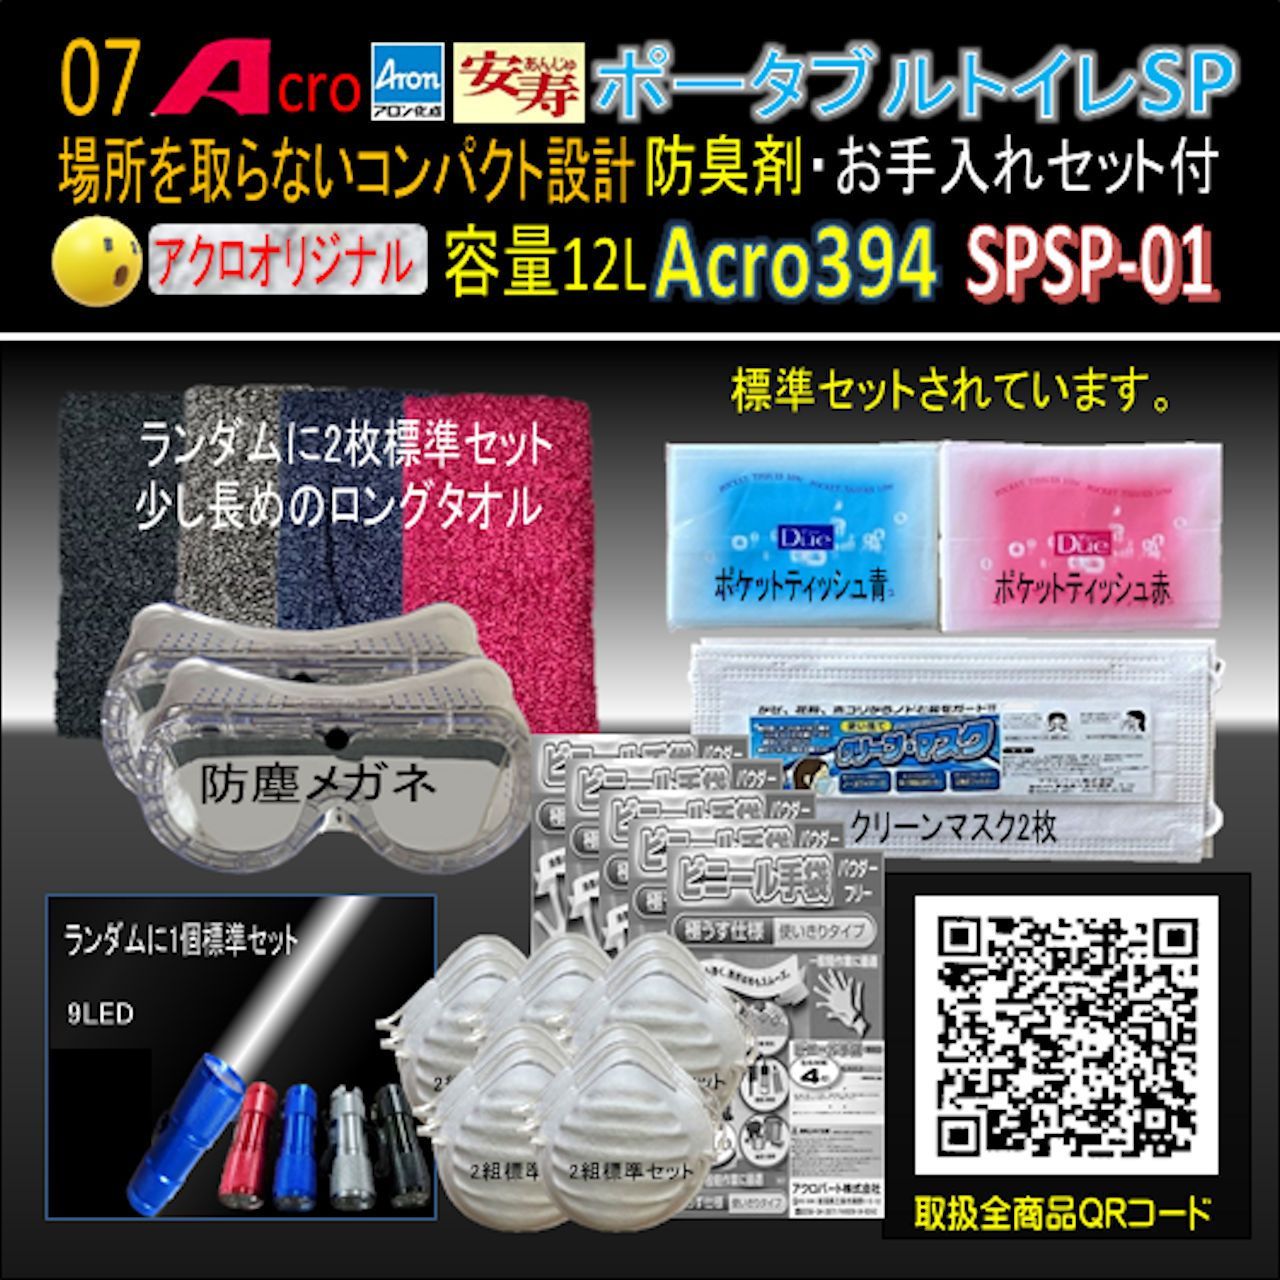 Acro394アロンポータブルトイレSP&防臭剤・清掃保護品お手入付01-02